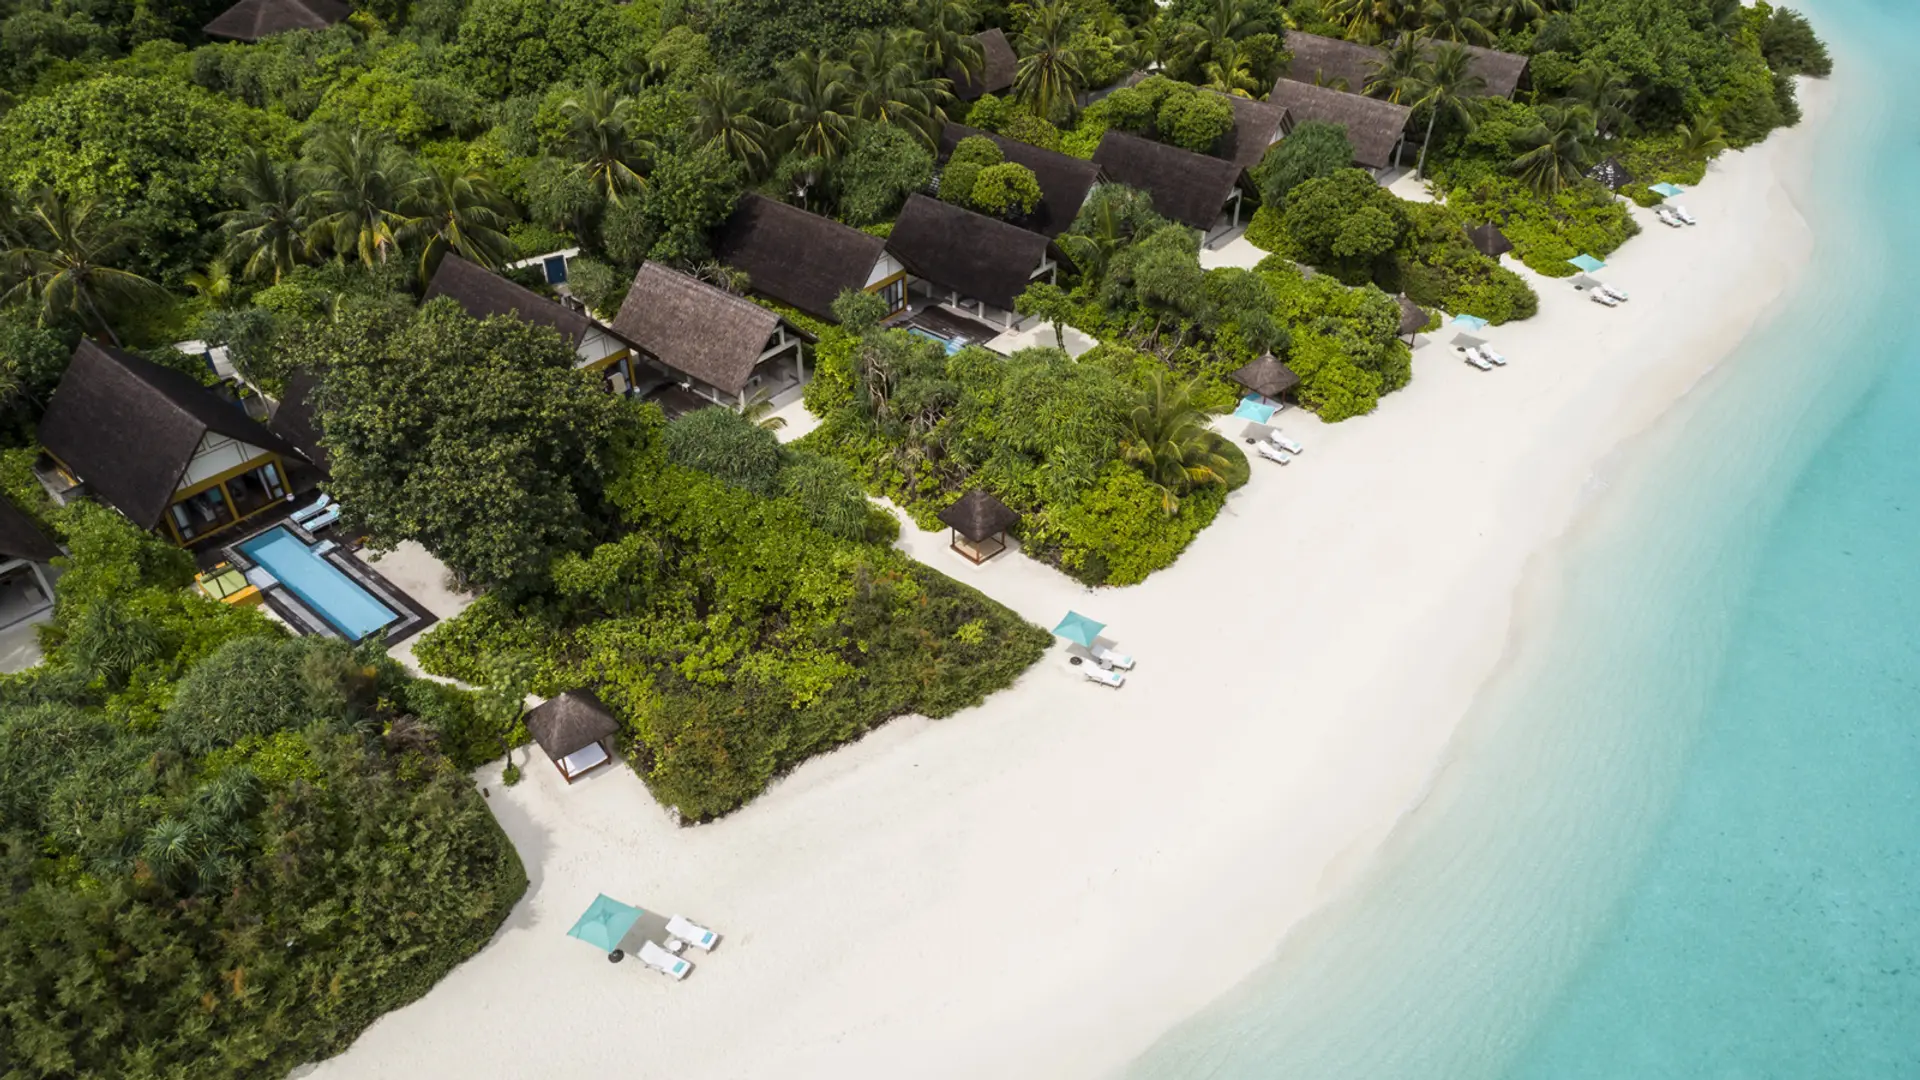 Hotel review Location' - Four Seasons Resort Maldives at Landaa Giraavaru - 2